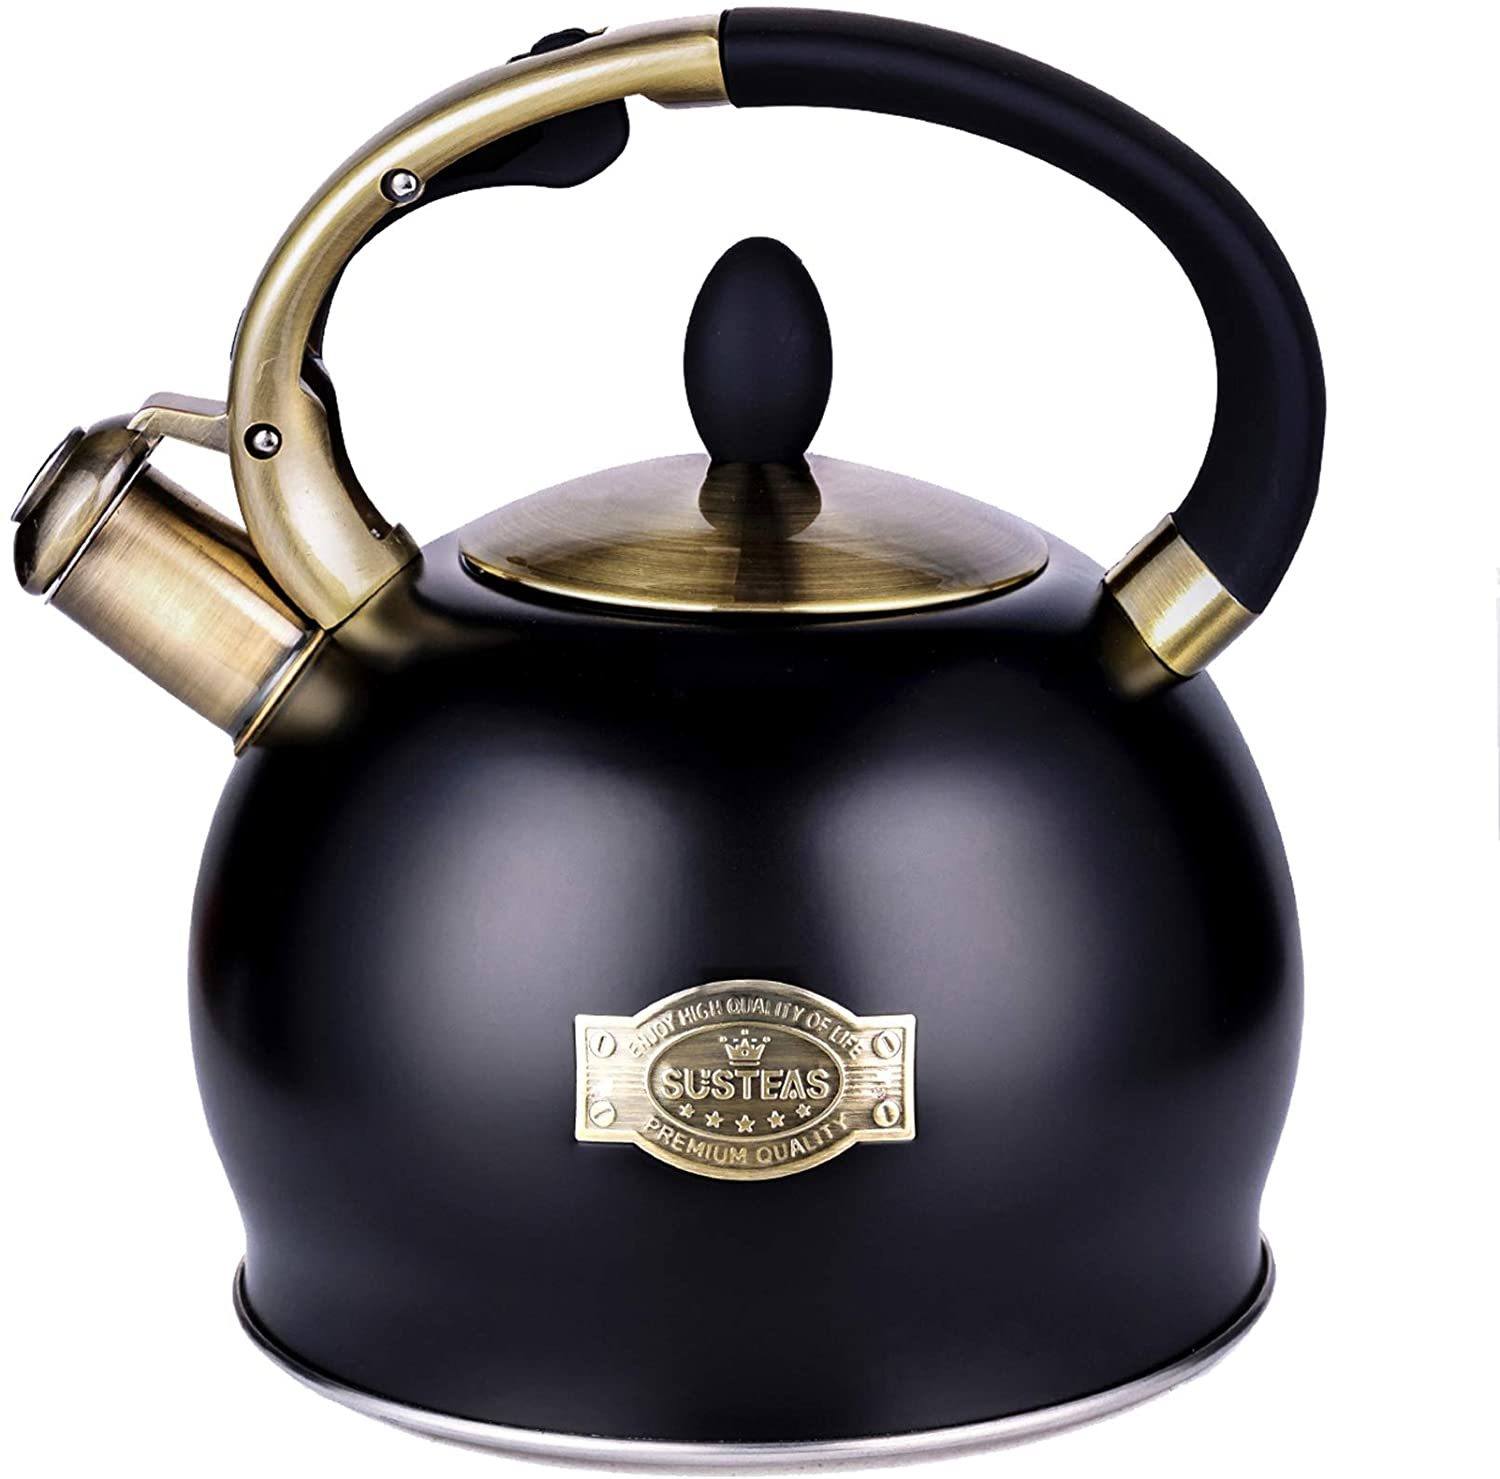 consumer reports best tea kettle